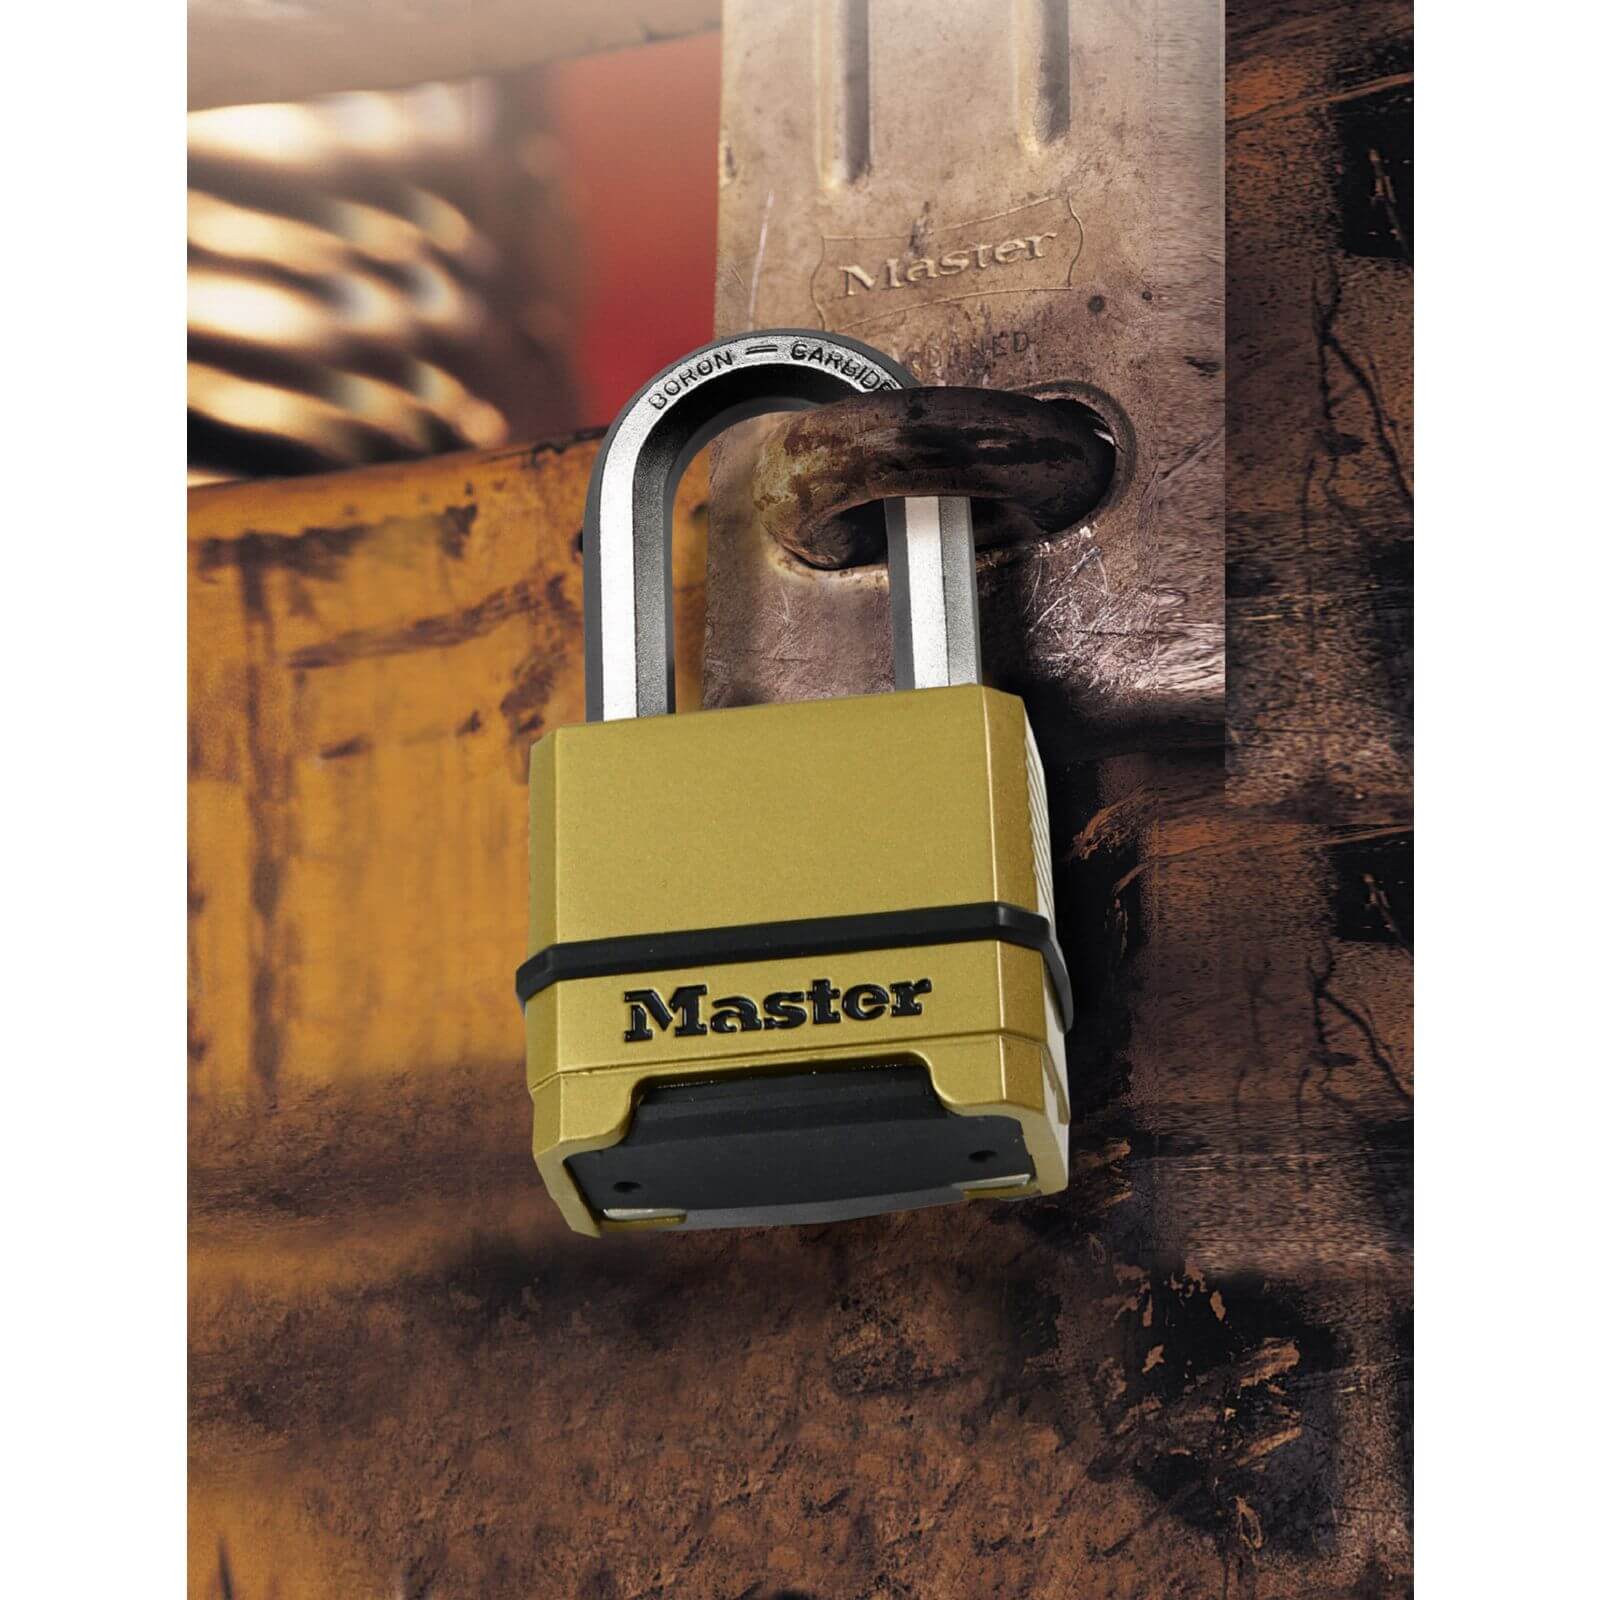 Master Lock Excell Combination Padlock - 50mm